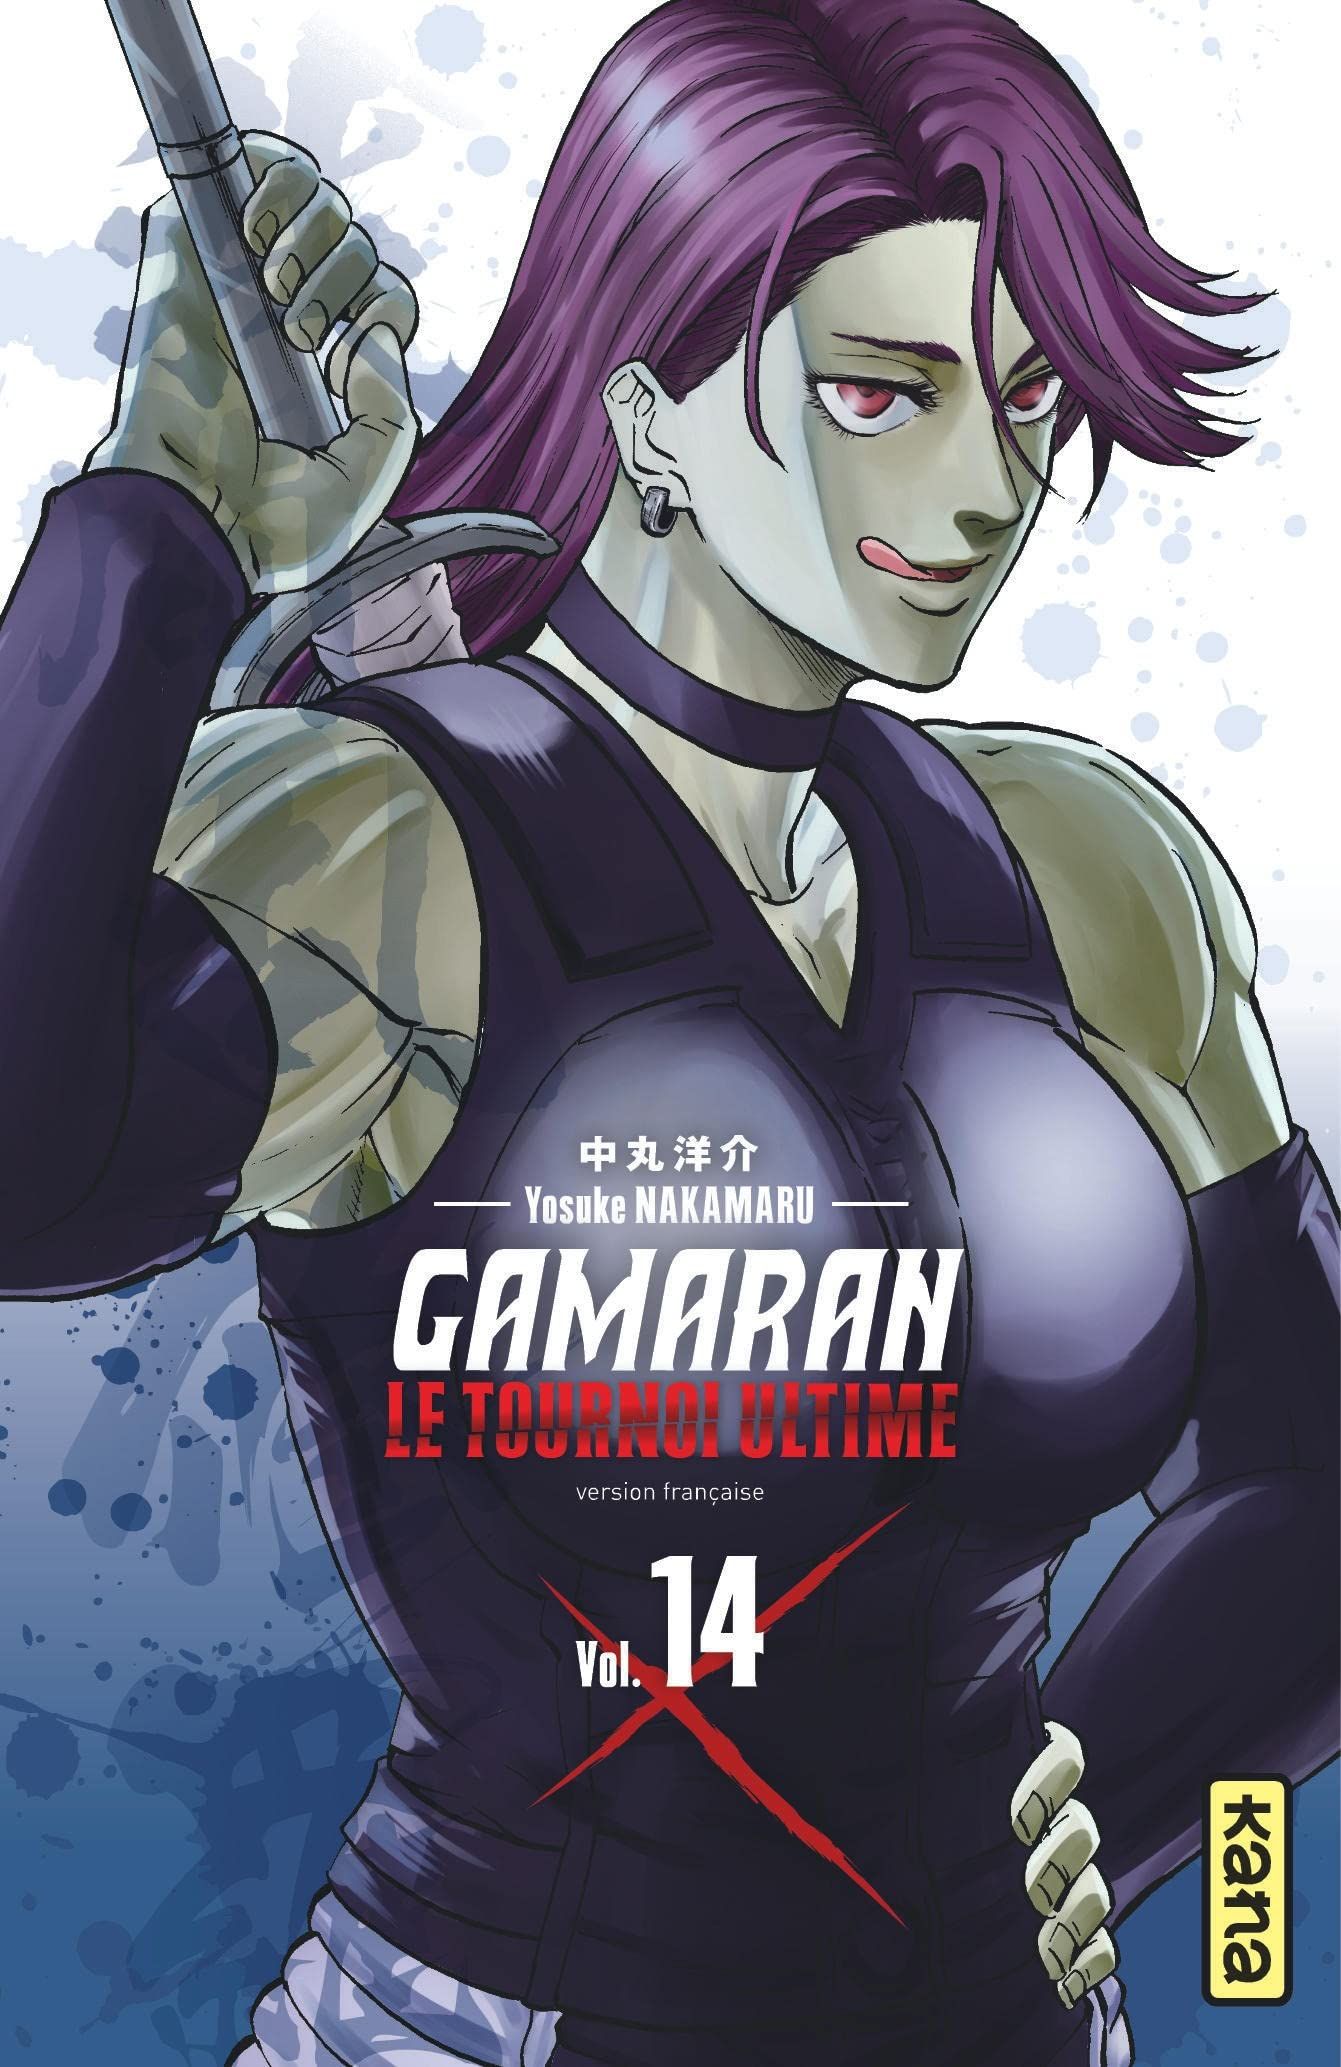 Gamaran - Le tournoi ultime Vol.14